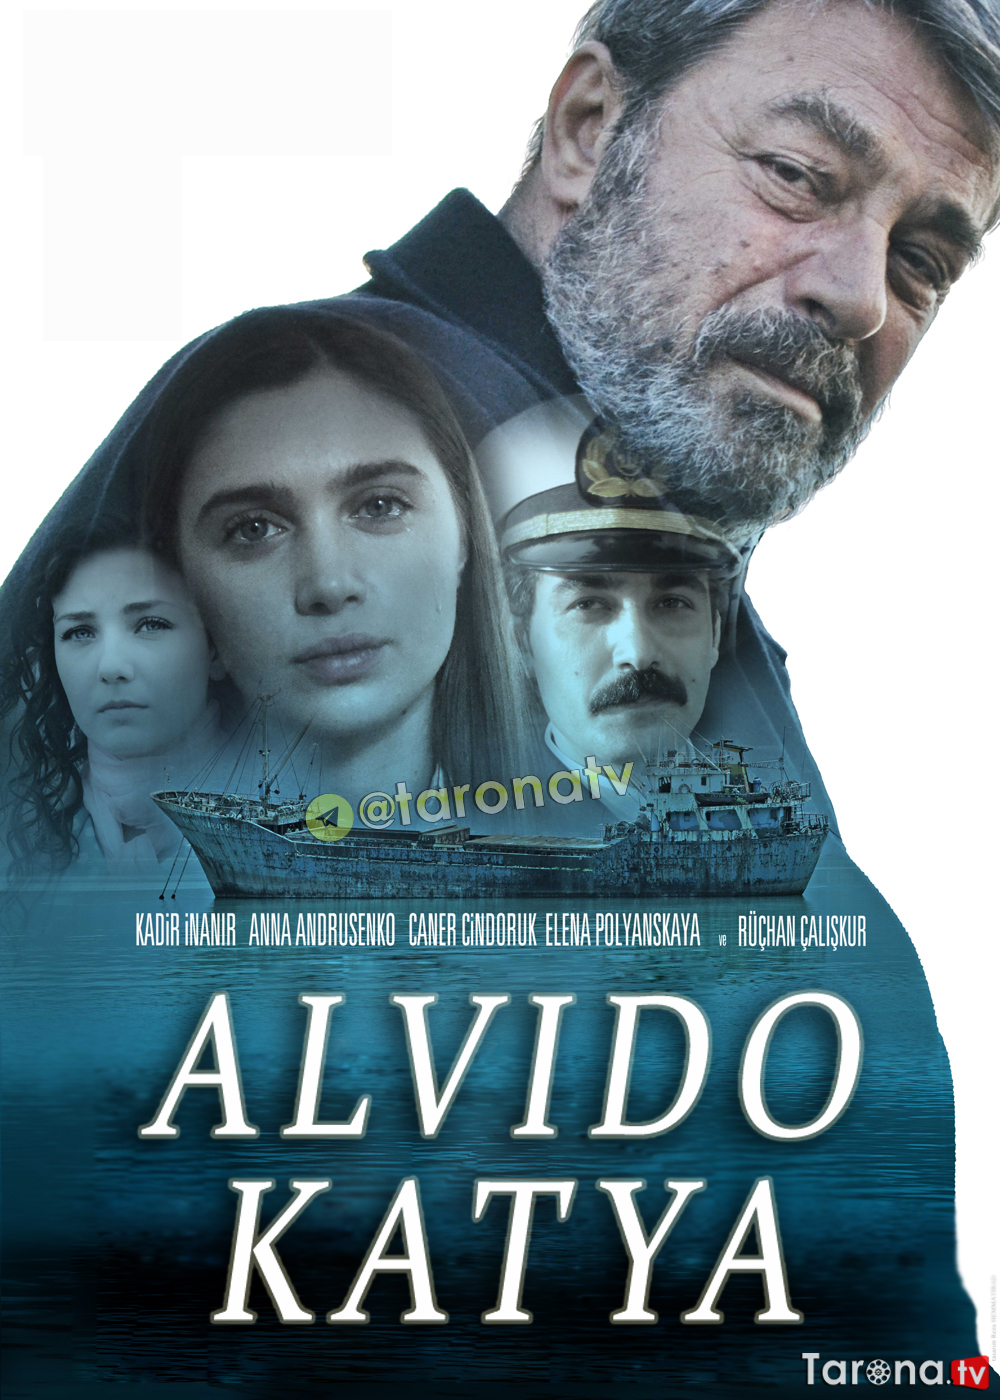 Alvido Katya (Uzbek tilida, O'zbekcha tarjima, HD Kino, drama) 2012